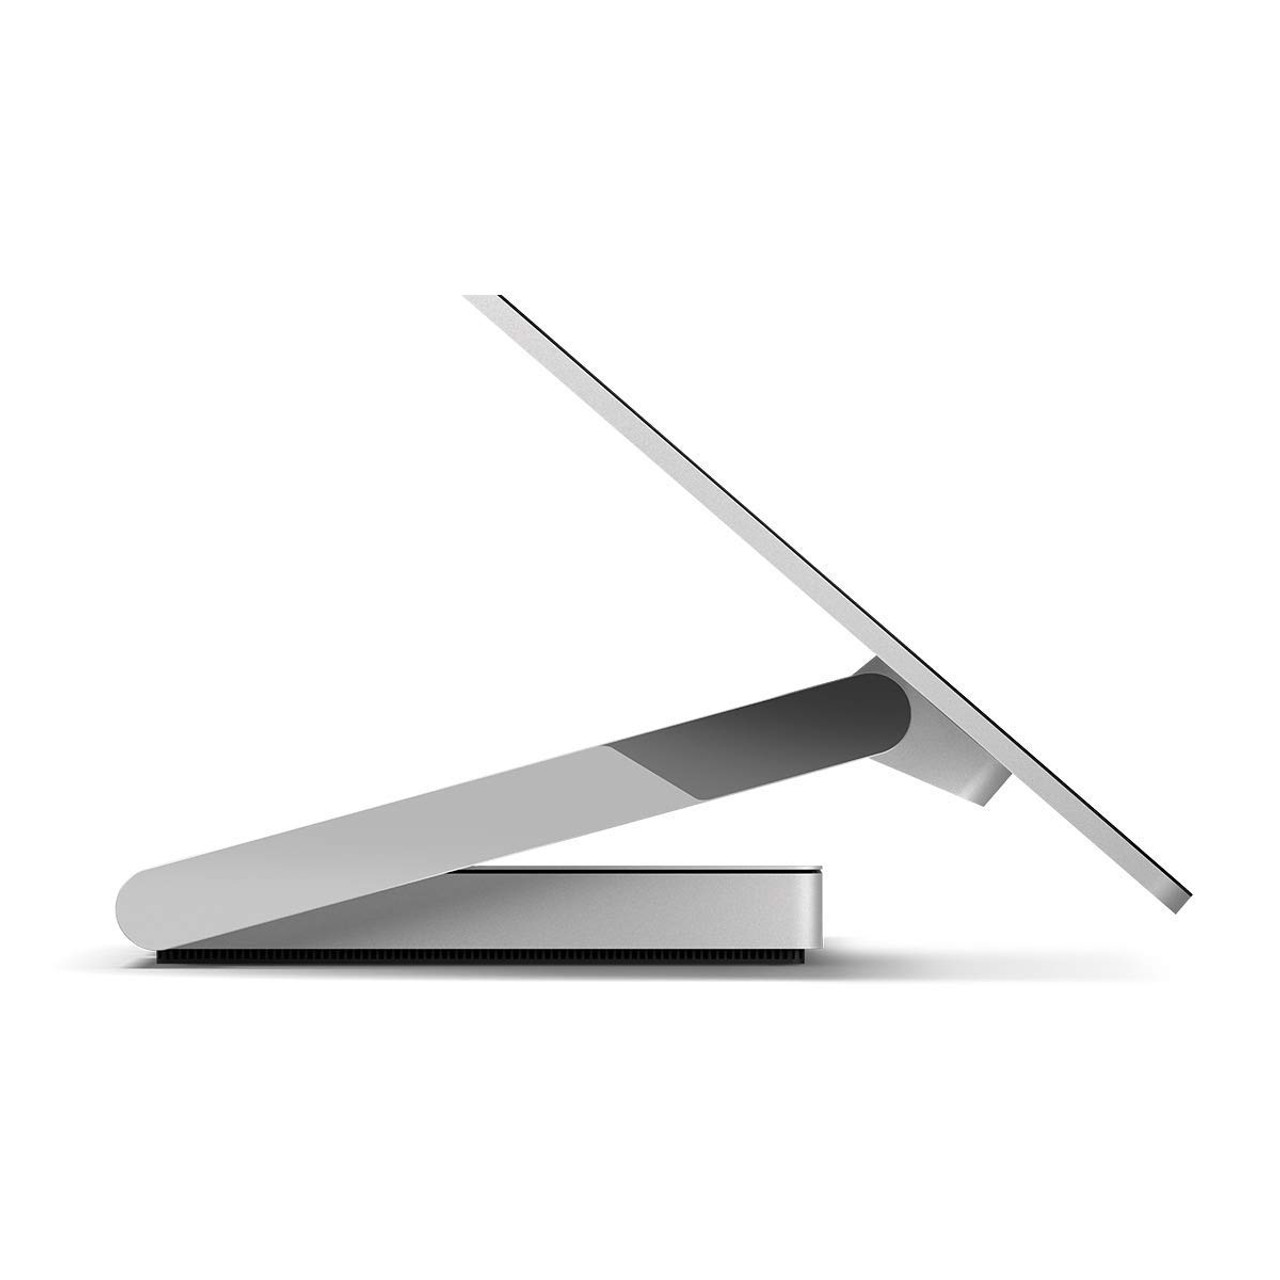 Microsoft LAH-00001 Surface Studio 2 AIO i7, NVIDIA GeForce product image